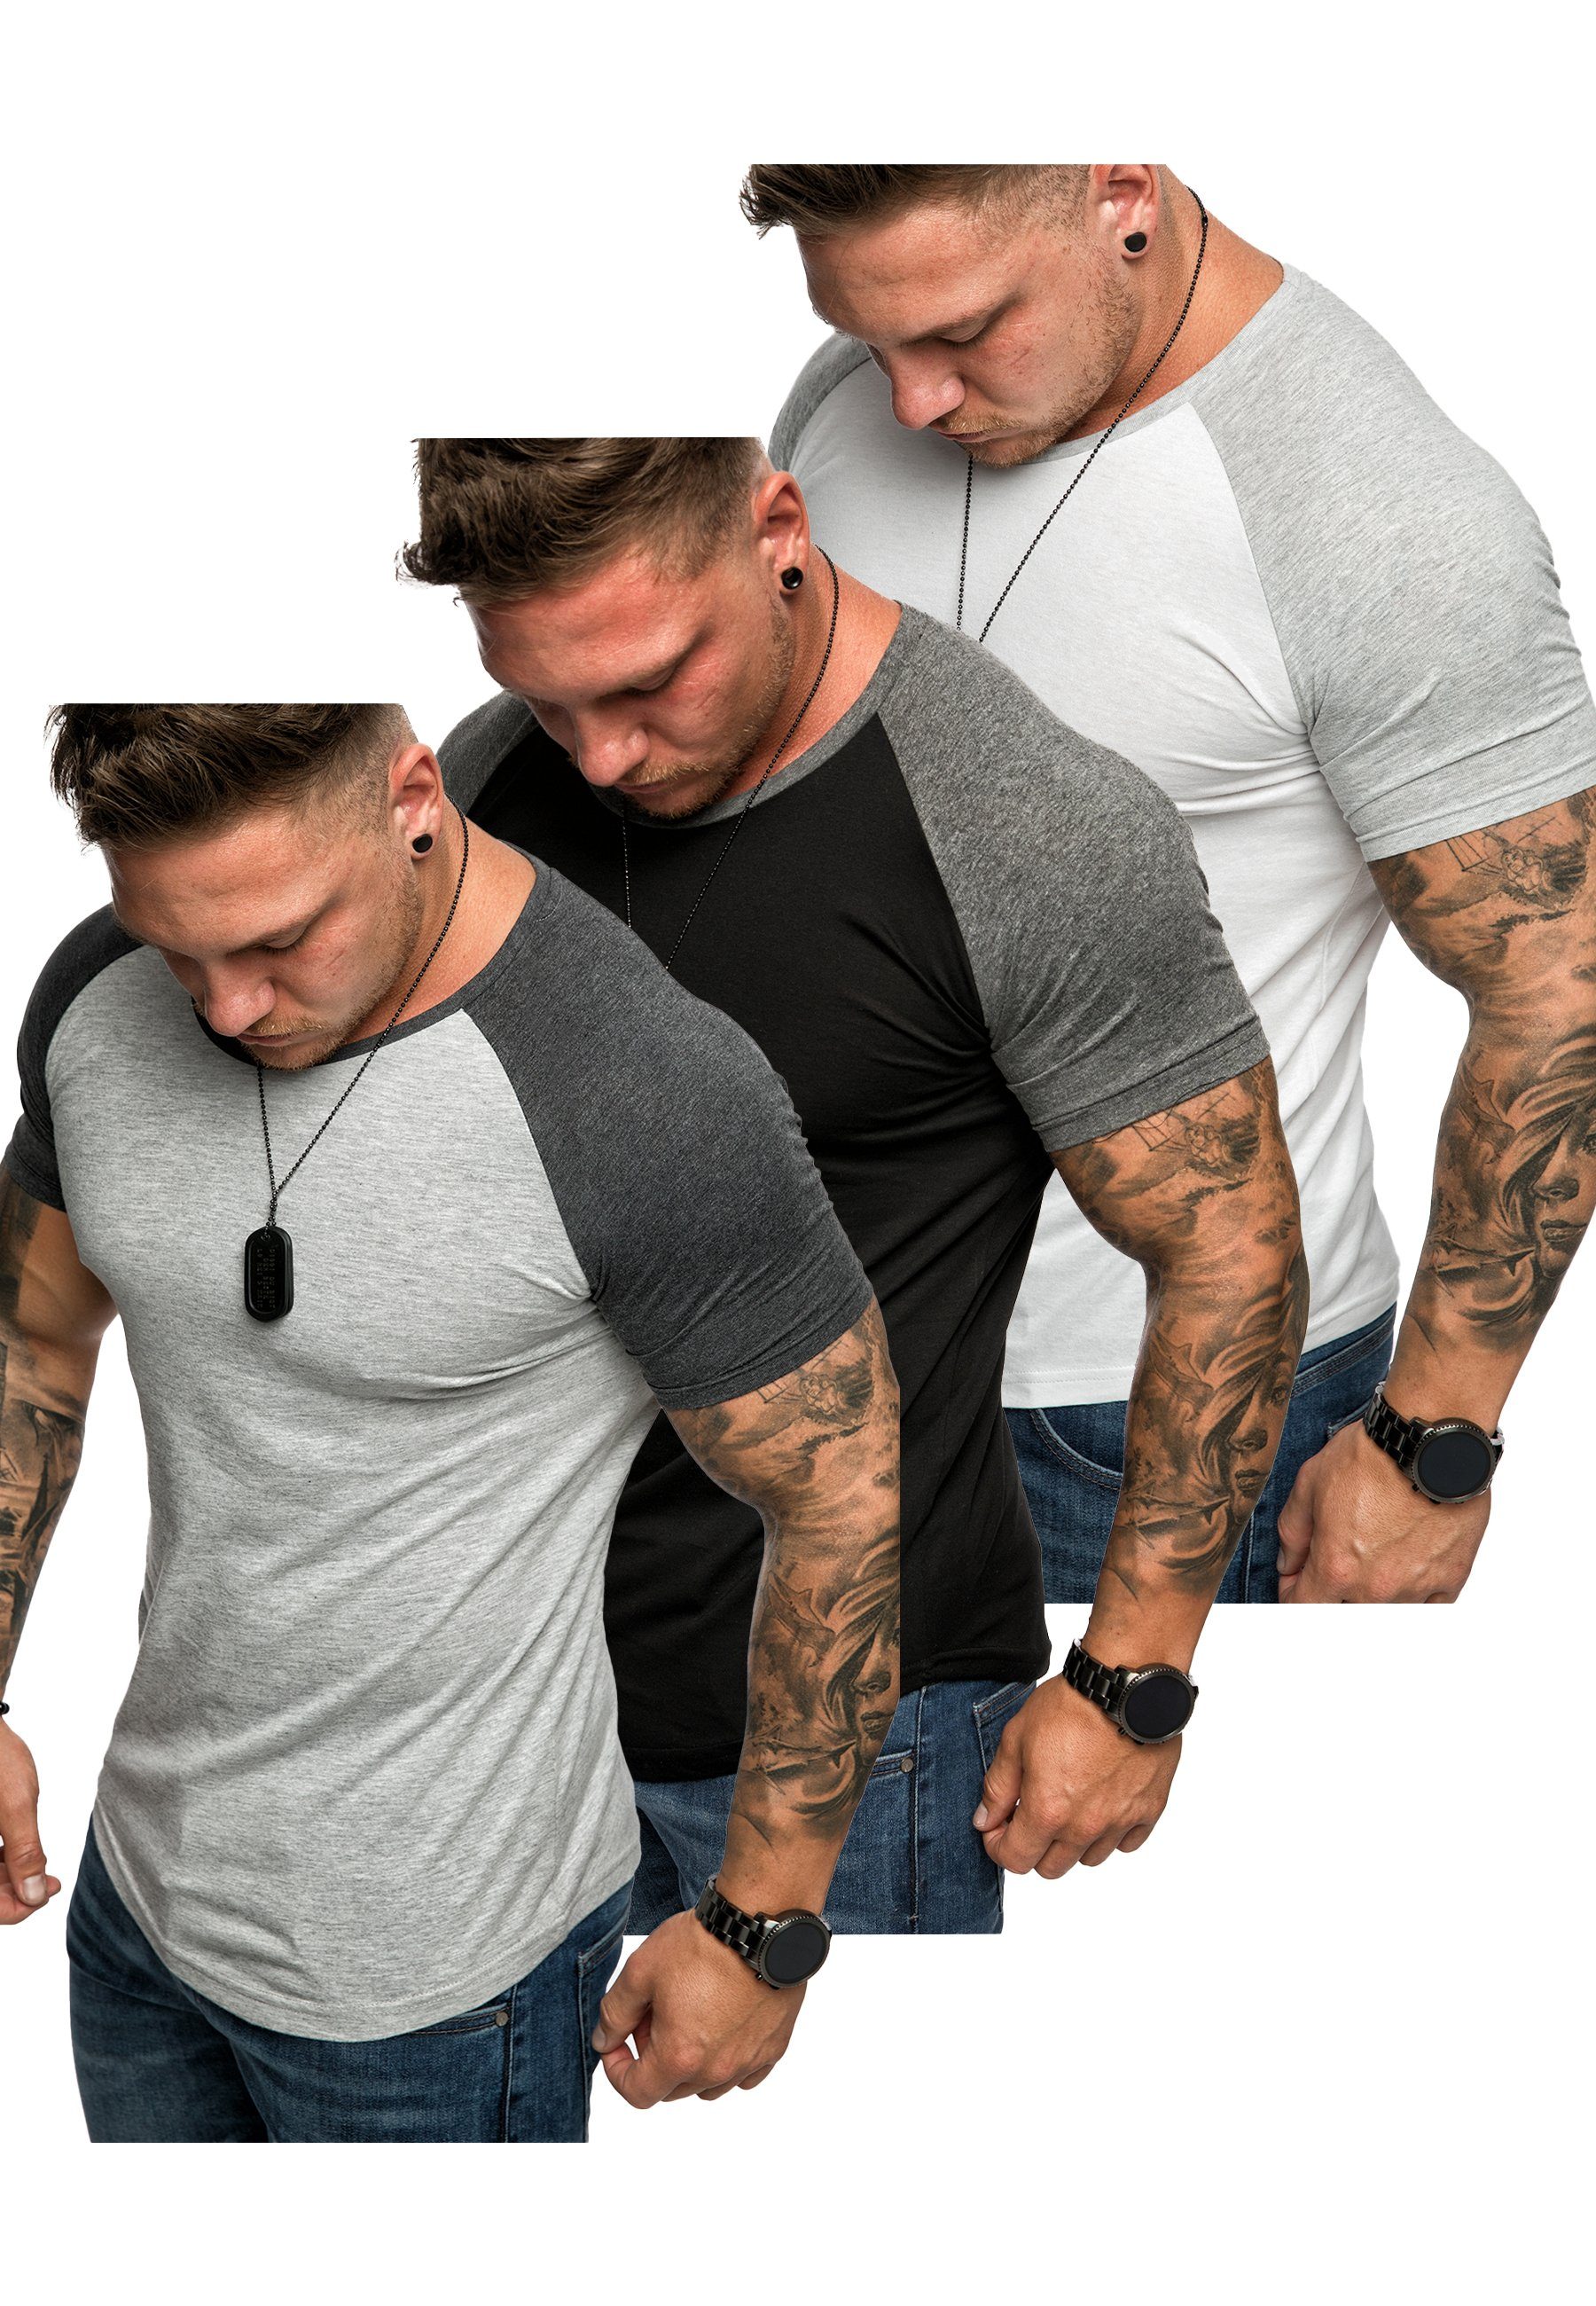 Herren T-Shirts Raglan (3er-Pack) OMAHA + Weiß/Grau) Kontrast (Grau/Anthrazit T-Shirt + Basic Amaci&Sons Oversize 3er-Pack Schwarz/Anthrazit 3. T-Shirt